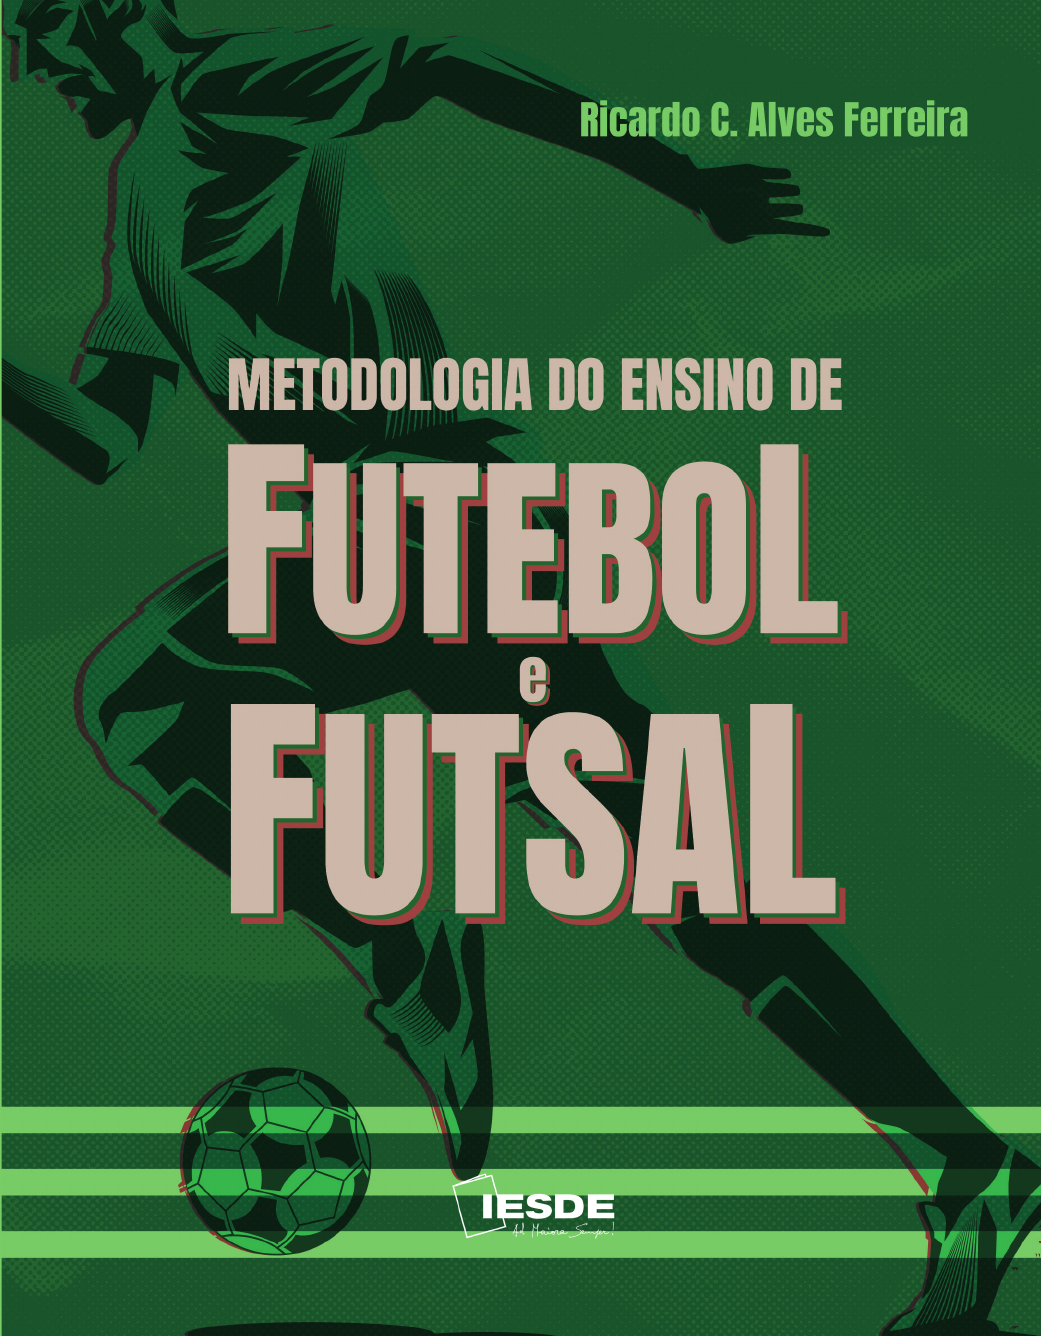 Aula 7 - METODOLOGIA DO ENSINO DO FUTEBOL E FUTSAL - Teoria e Metodologia  dos Esportes Coletivos II